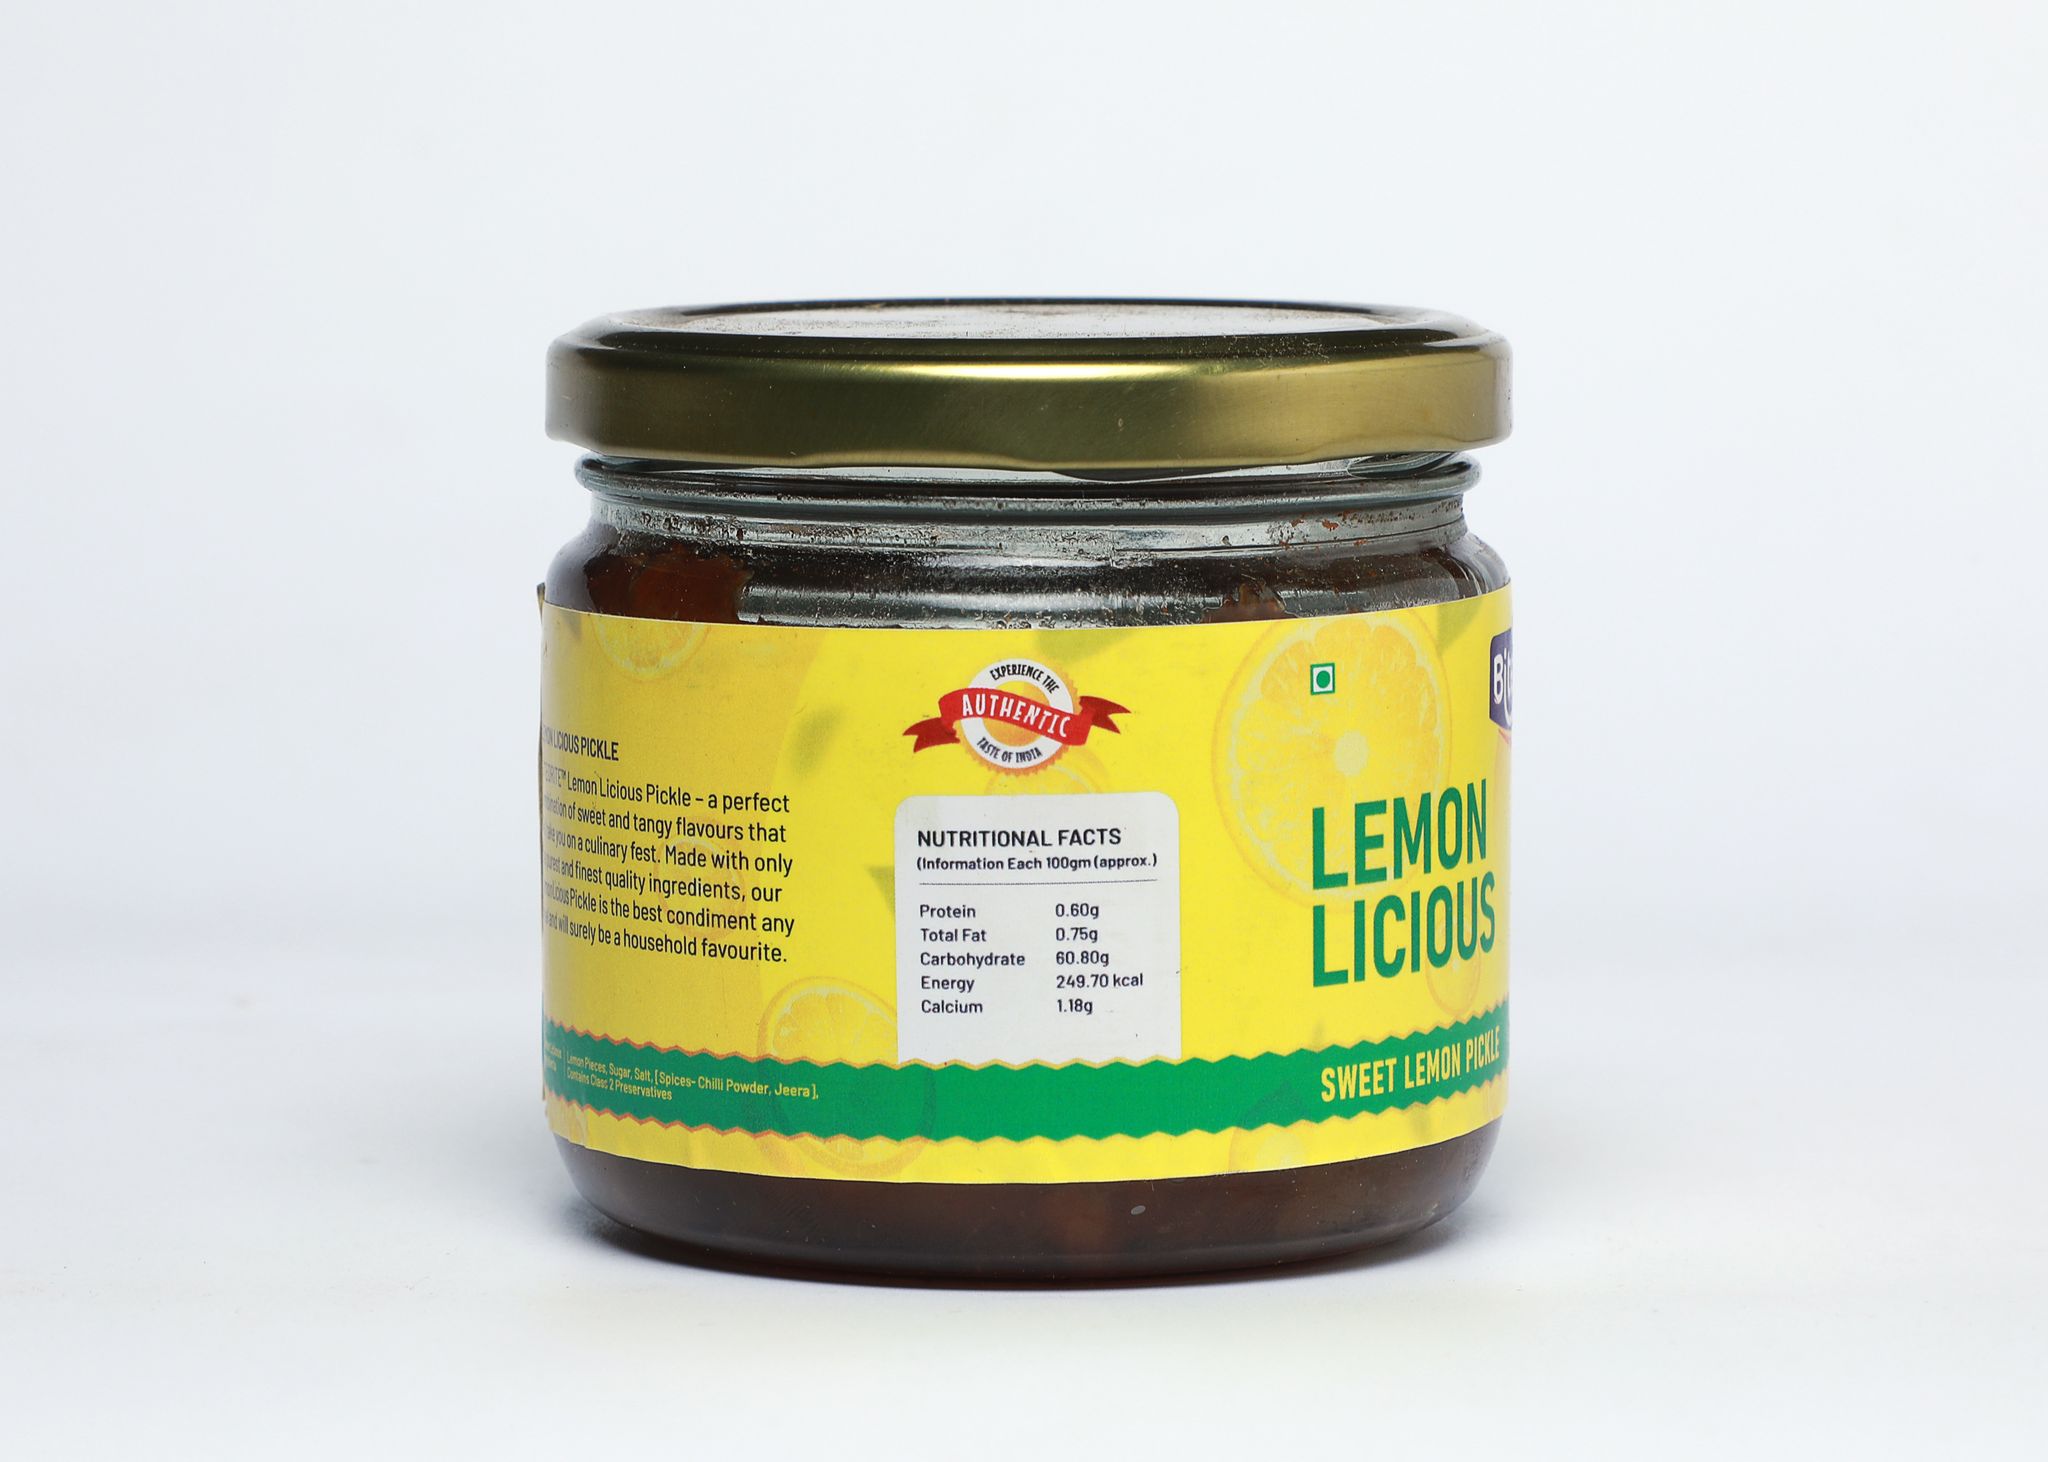 Biteorite Lemon Licious Pickle, 350g